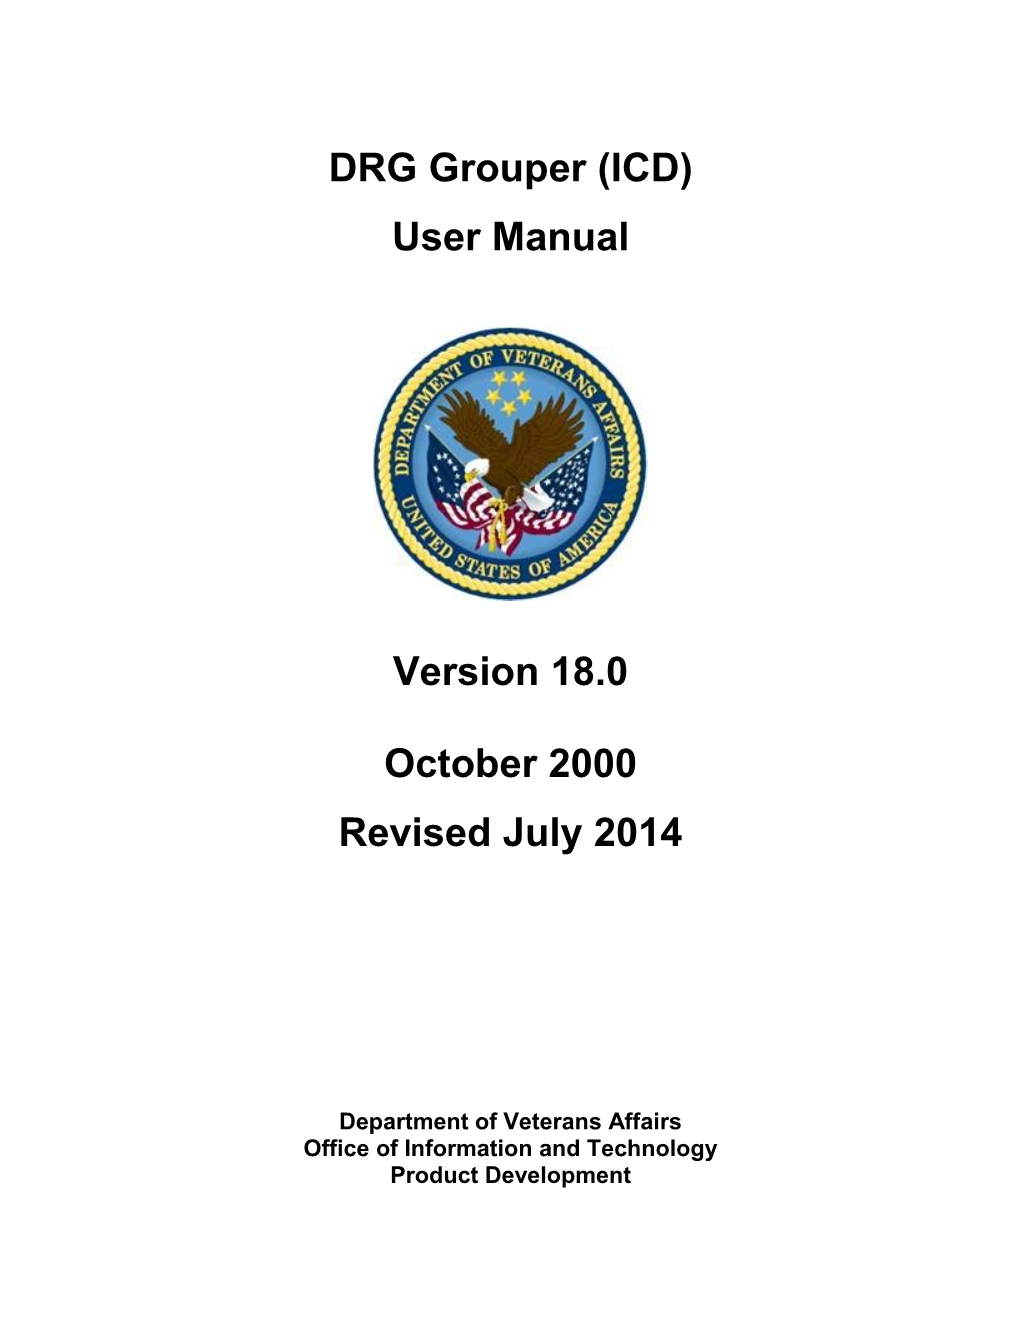 DRG Grouper User Manual